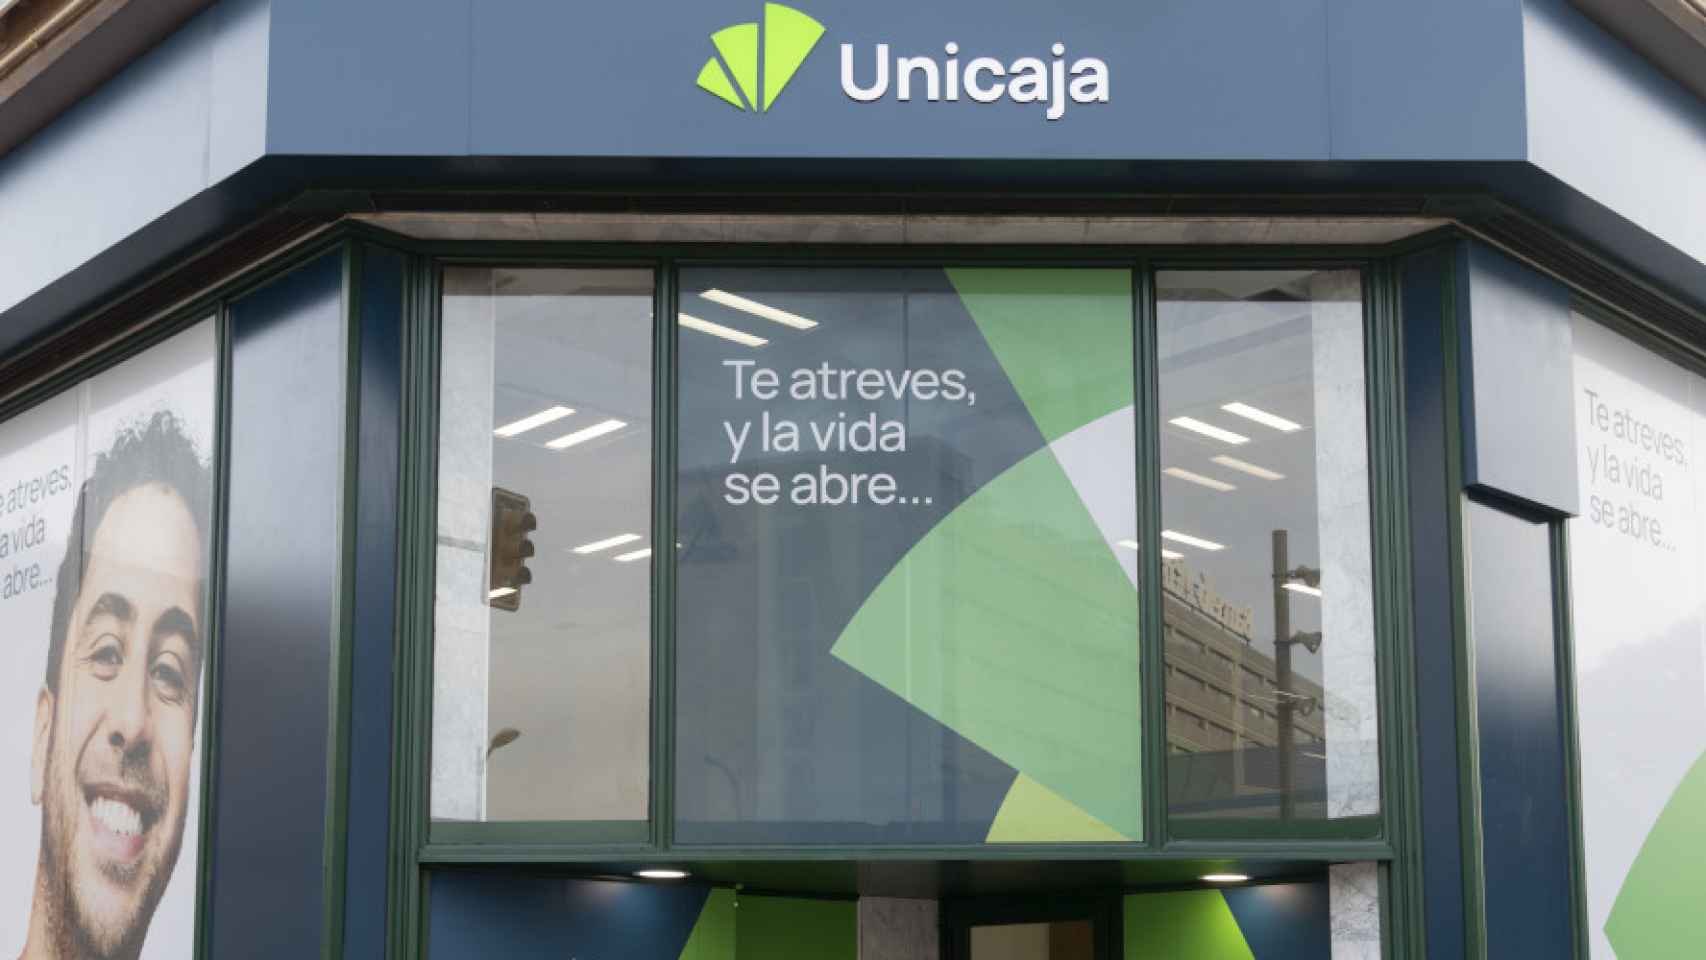 Nueva identidad corporativa de Unicaja.